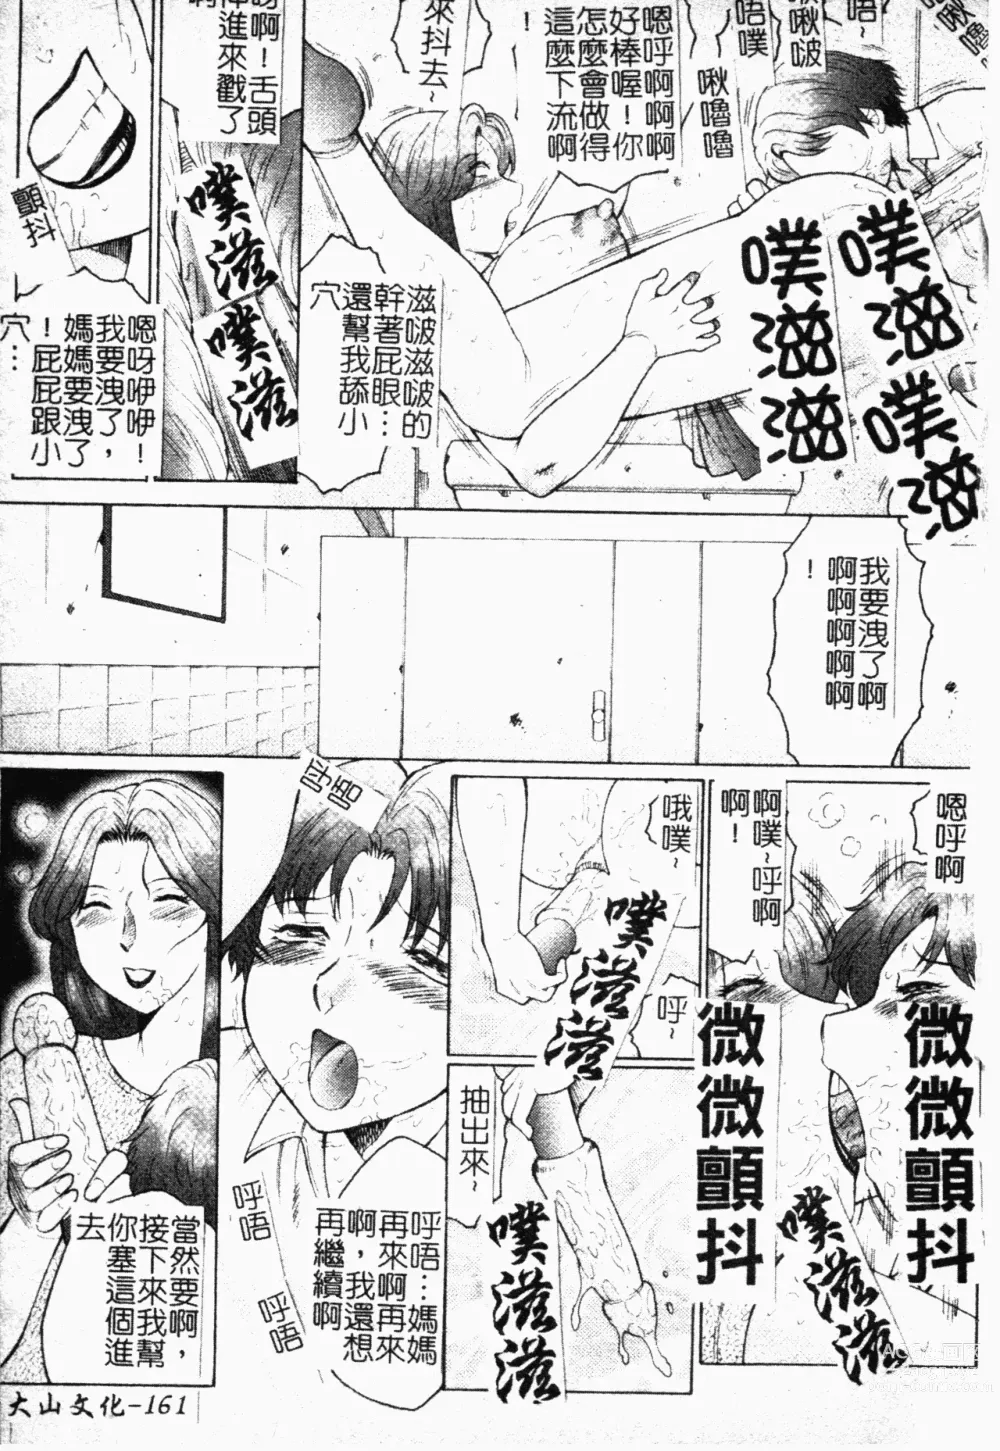 Page 161 of manga Haha Mamire